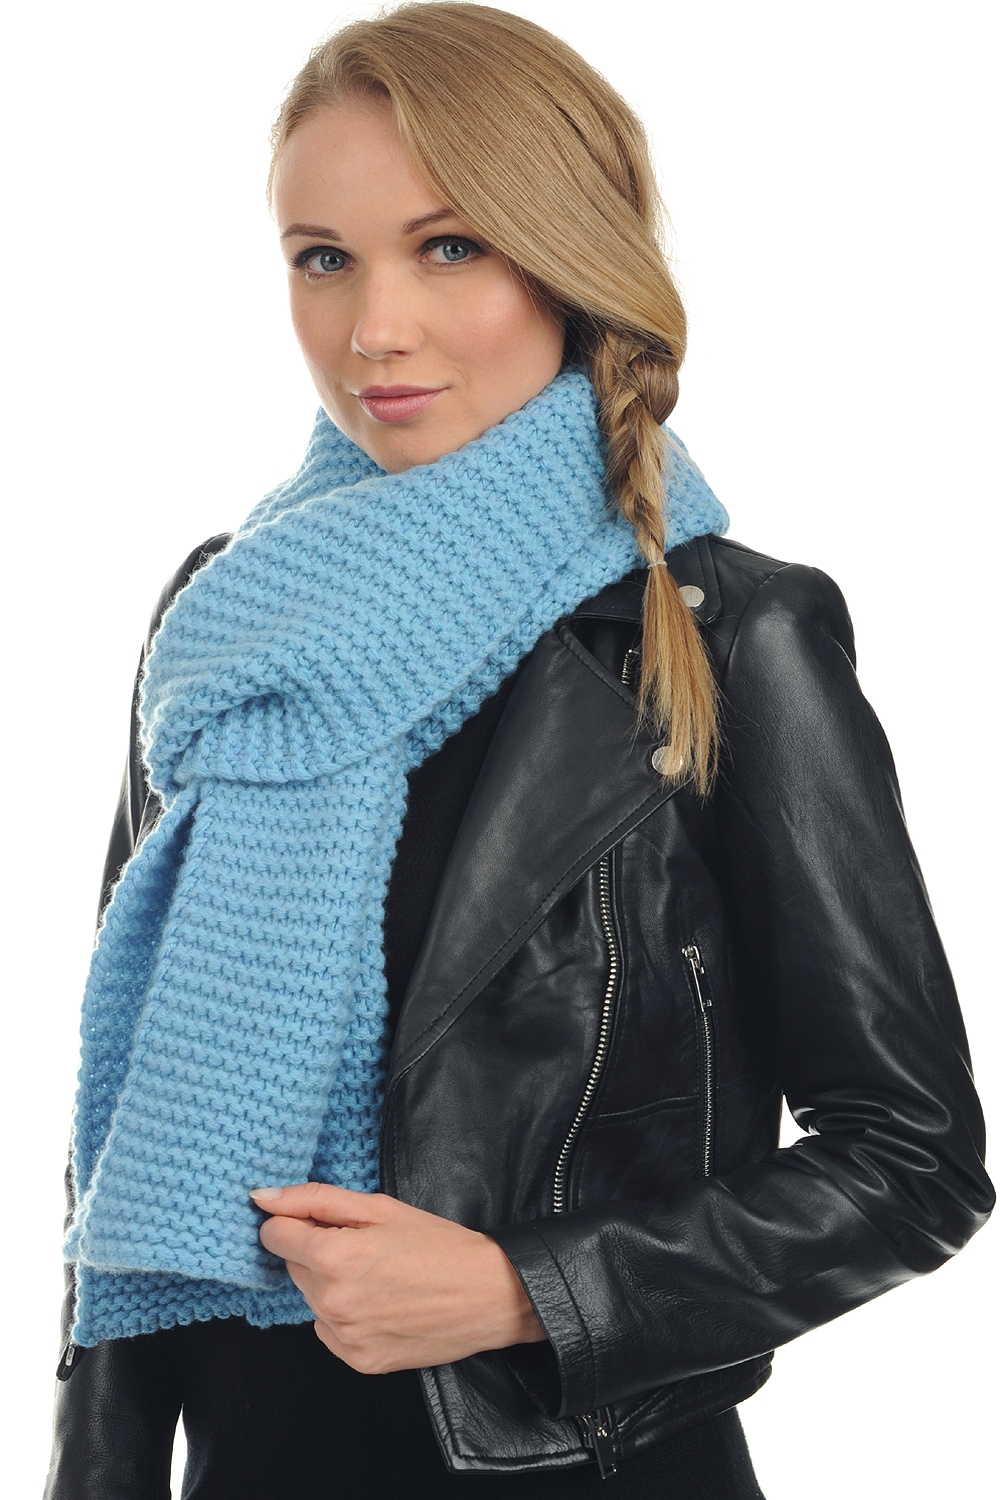 Cashmere accessories scarves  mufflers manouche teal blue 190 x 26 cm